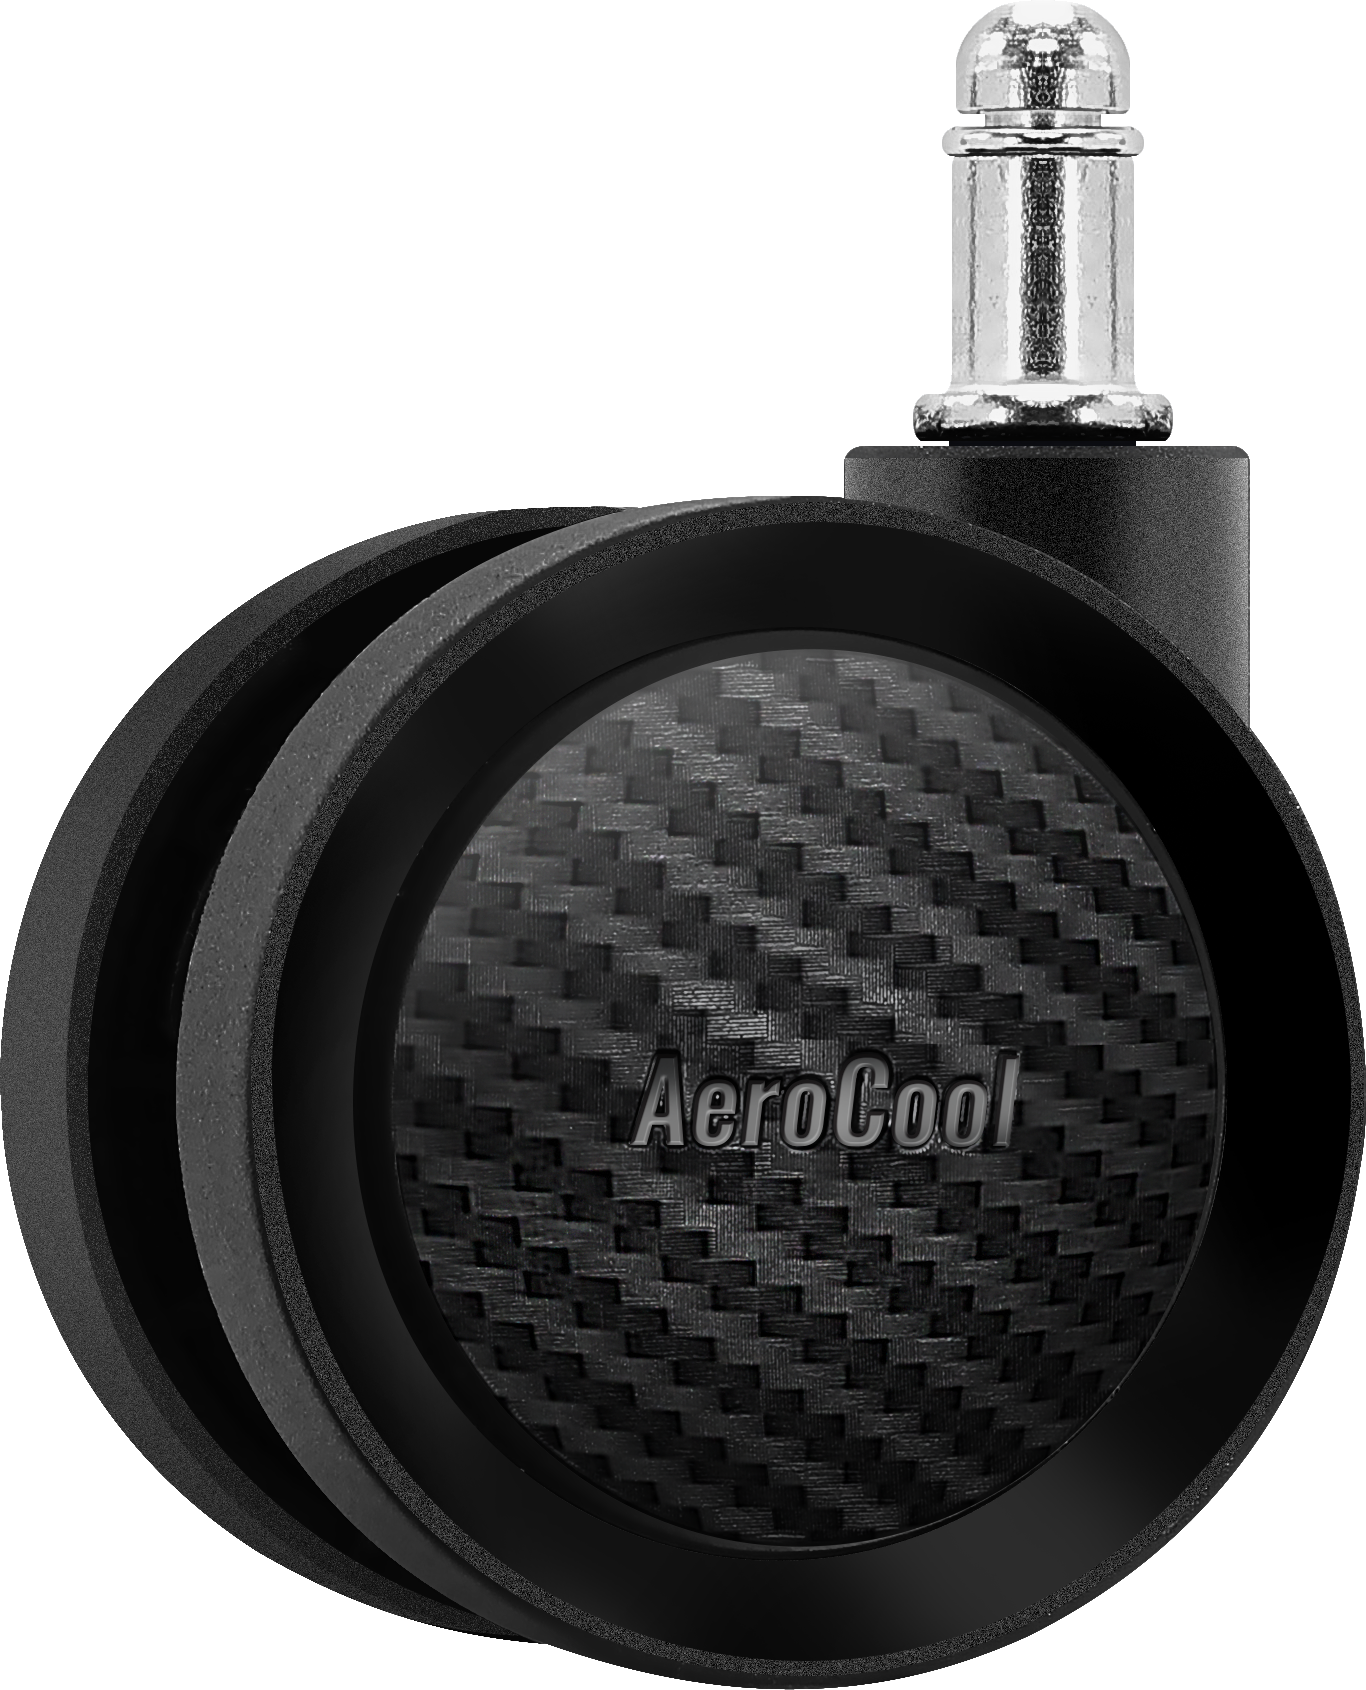 Aerocool - Aerocool Crown Nobility Series Gaming Chair - Black/Blue